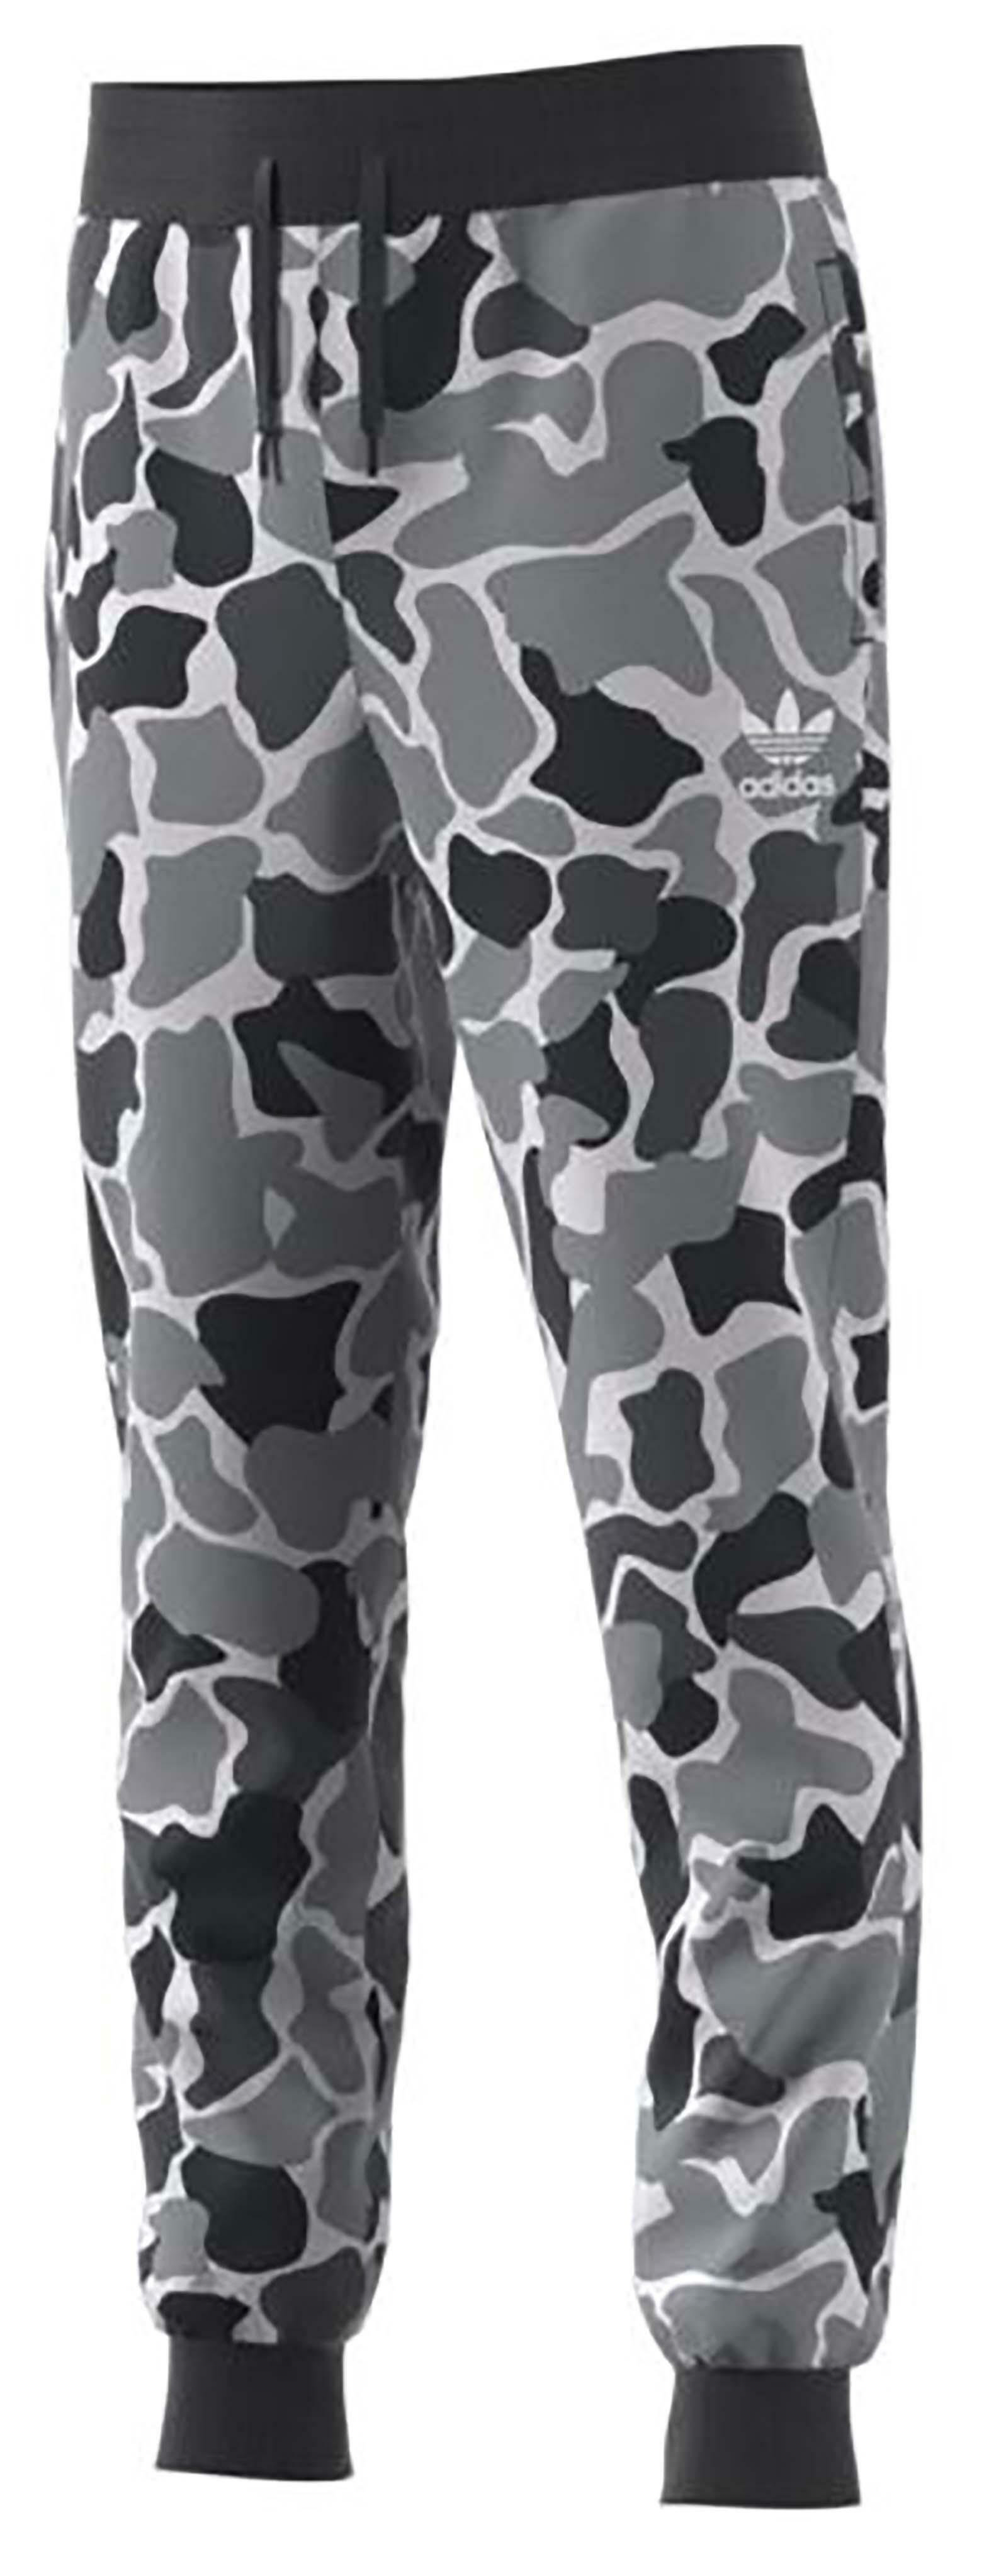 adidas originals adidas j trefoil pantaloni felpati bambino grigio camouflage dh2711